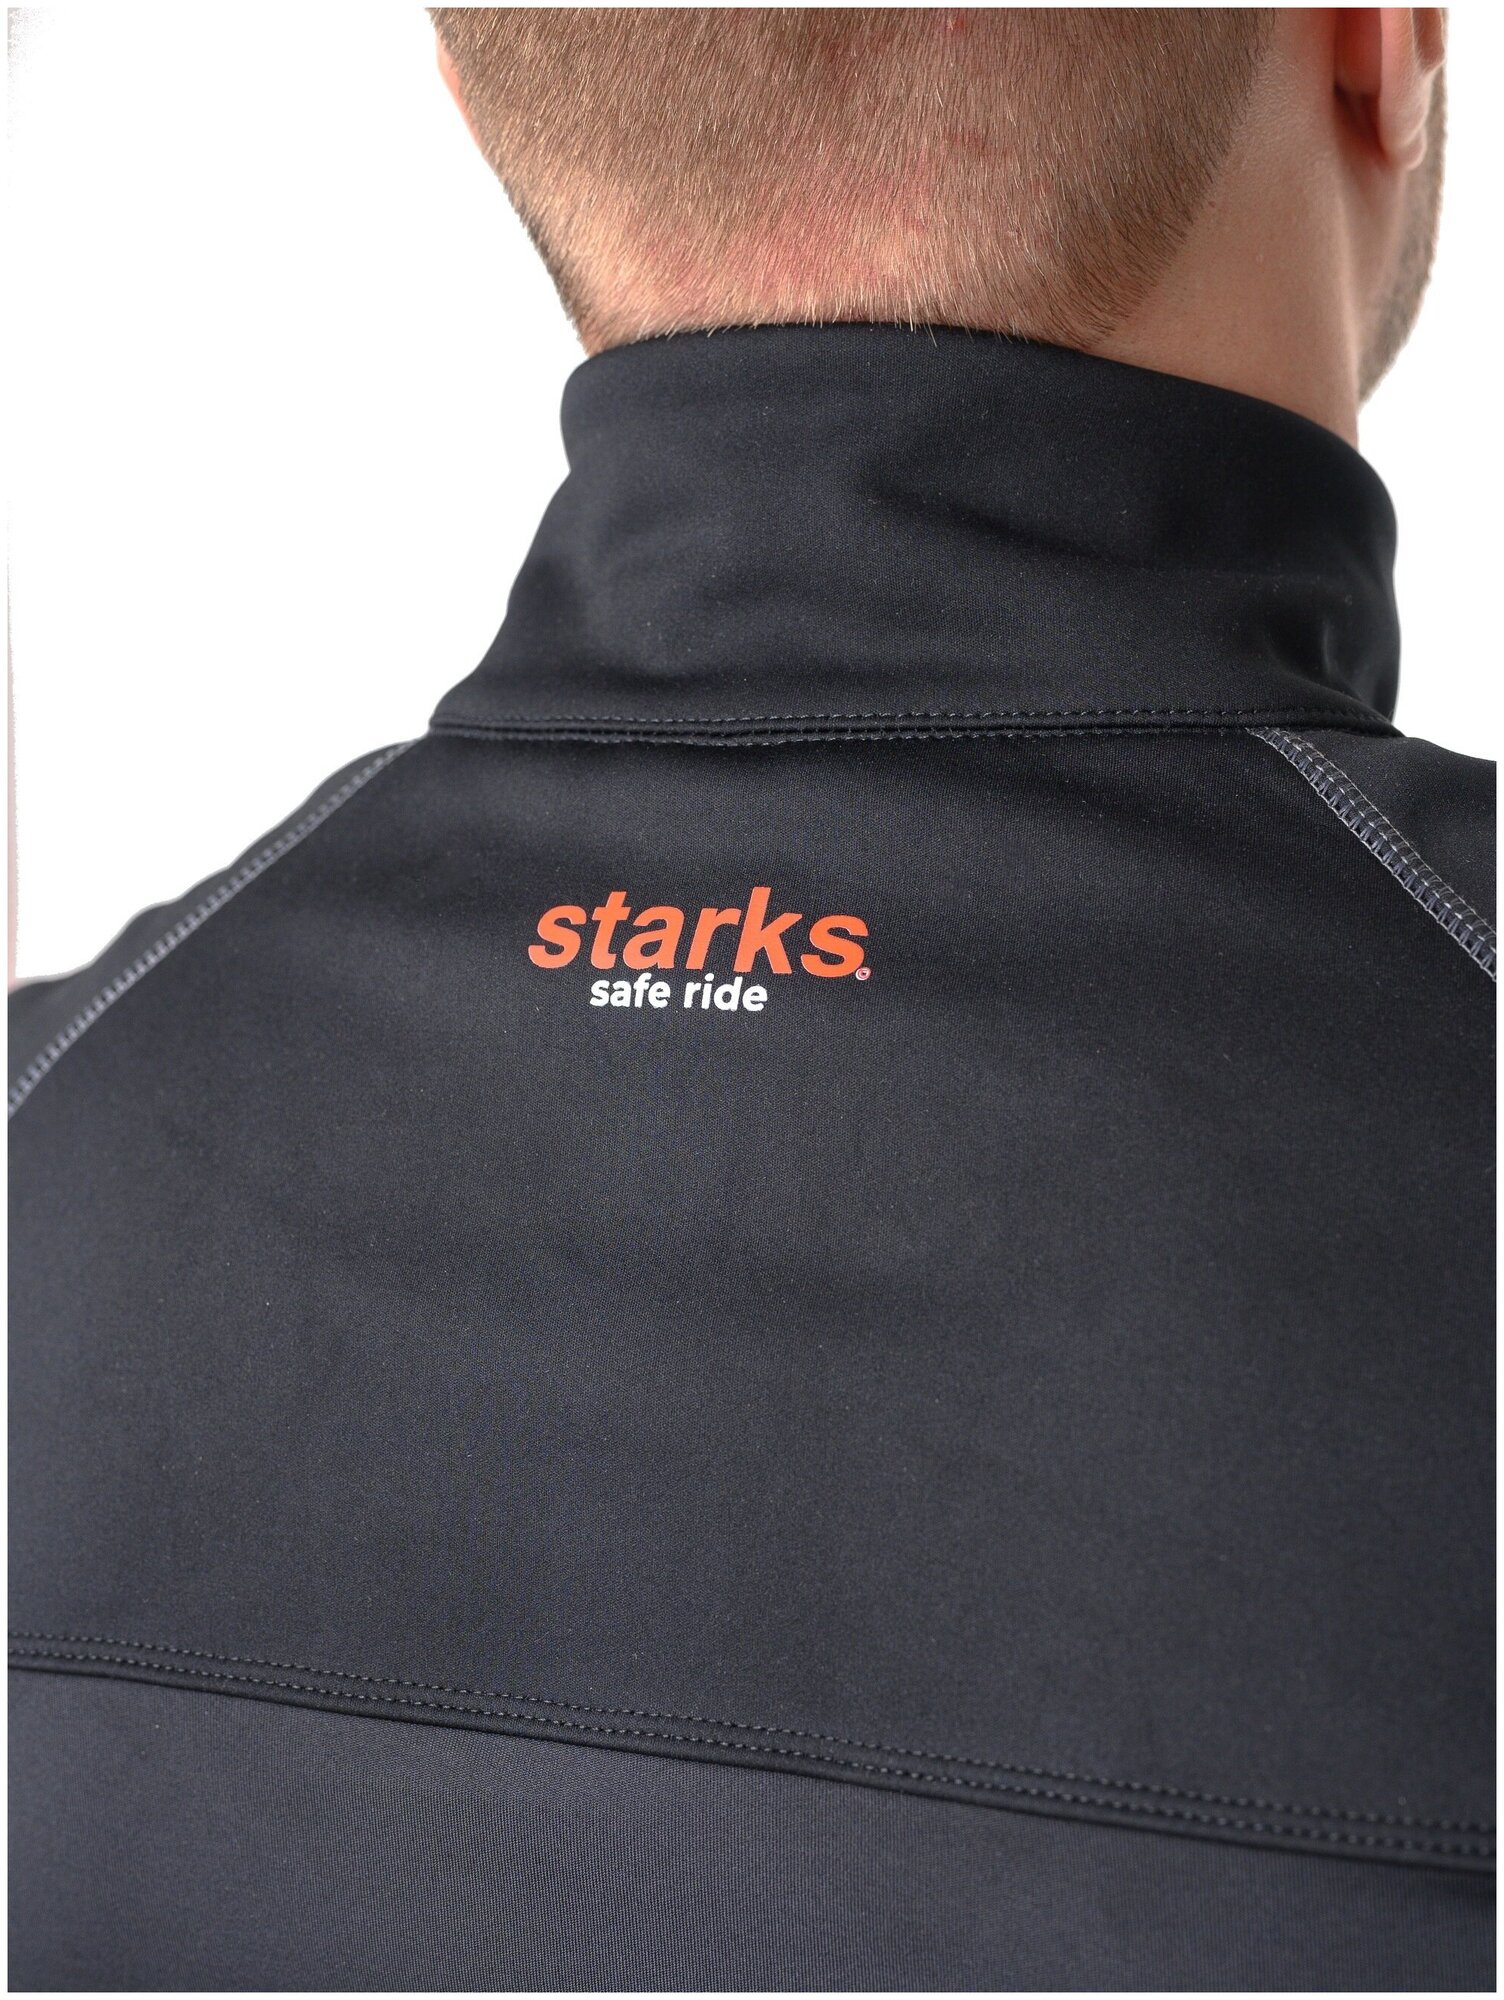 Starks Warm Long Shirt Extreme термокофта черная